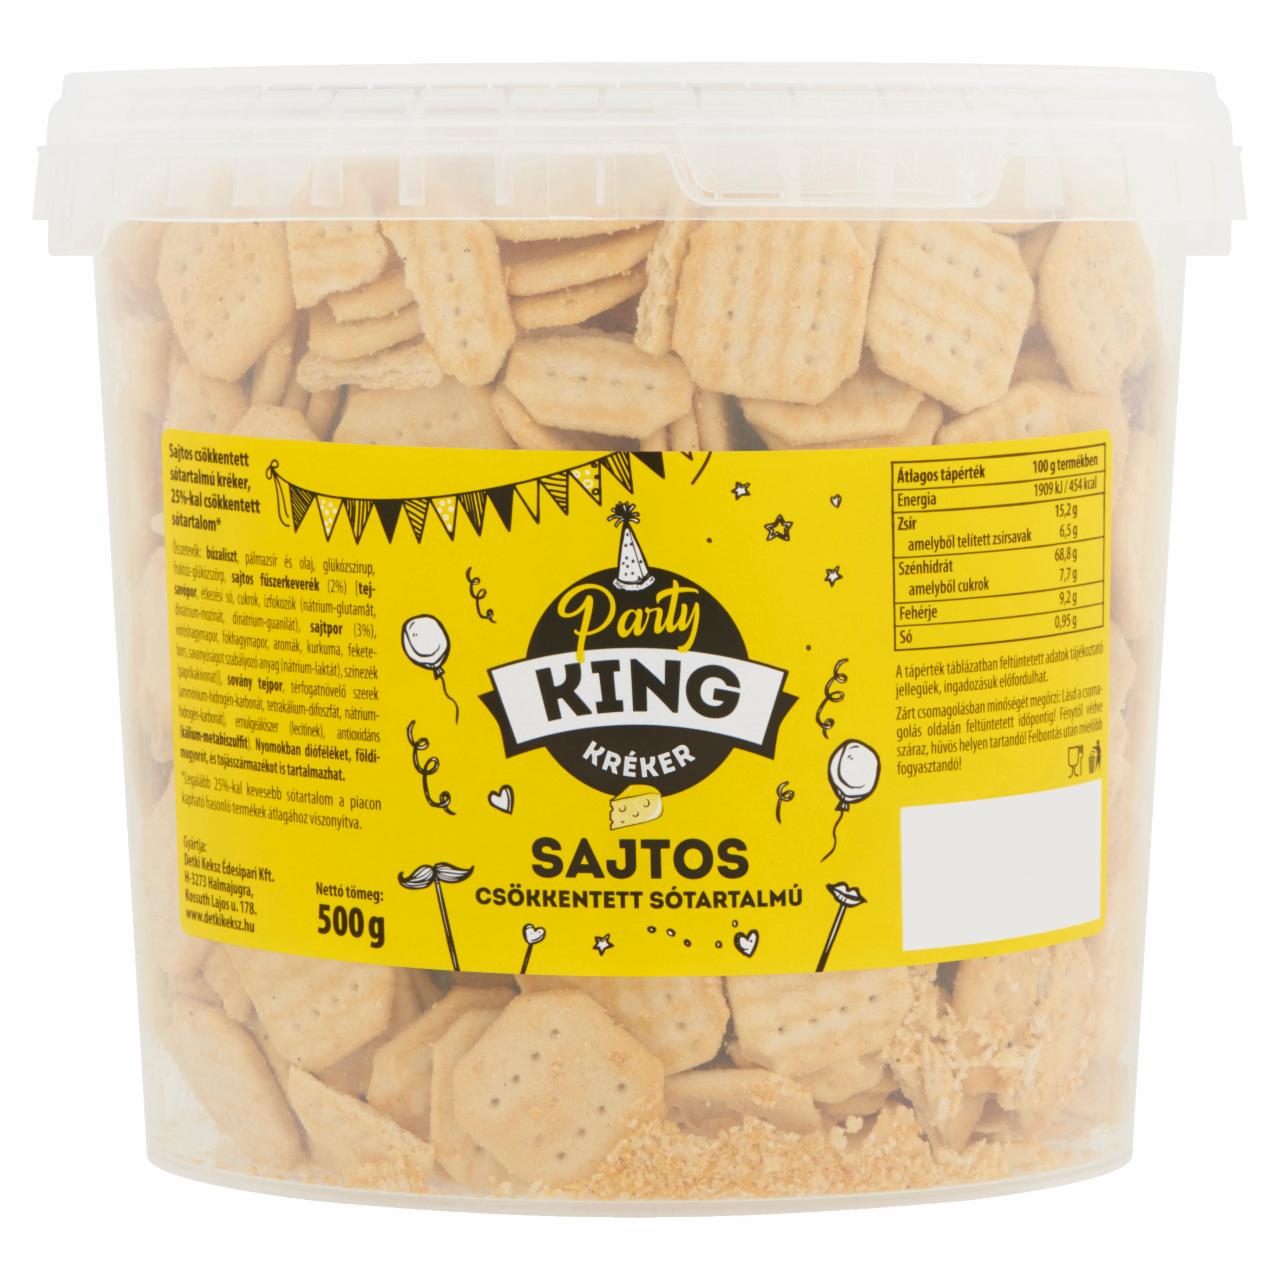 Képek - King csökkentett sótartalmú sajtos kréker 500 g